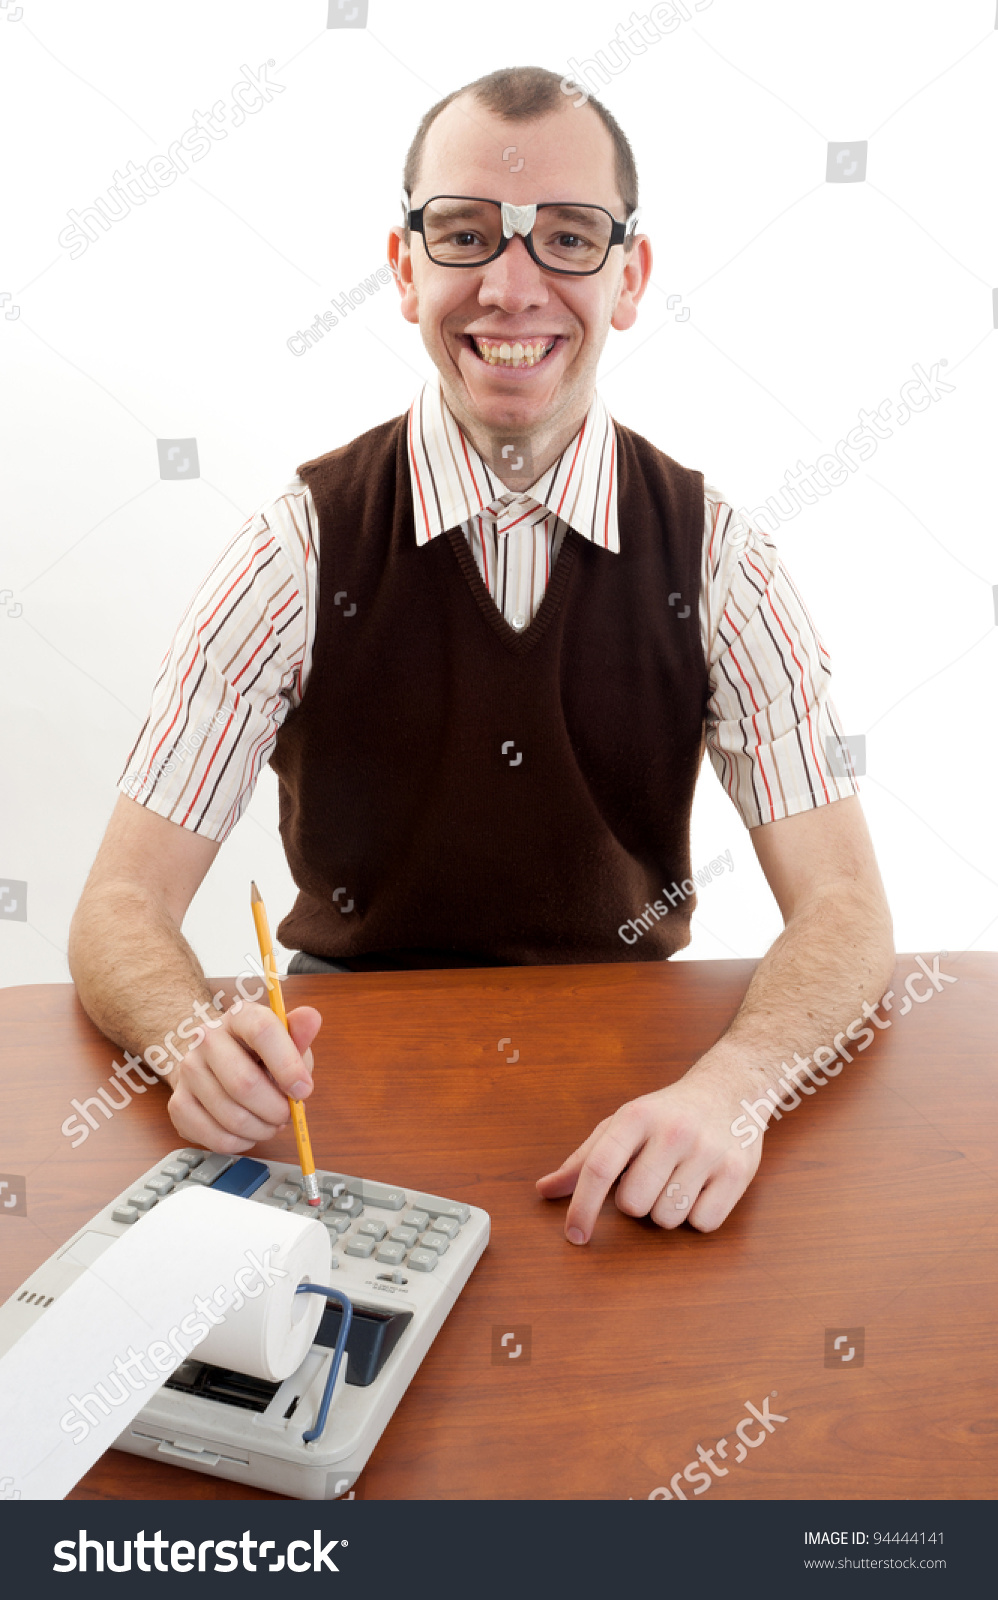 stock-photo-smiling-nerdy-accountant-944